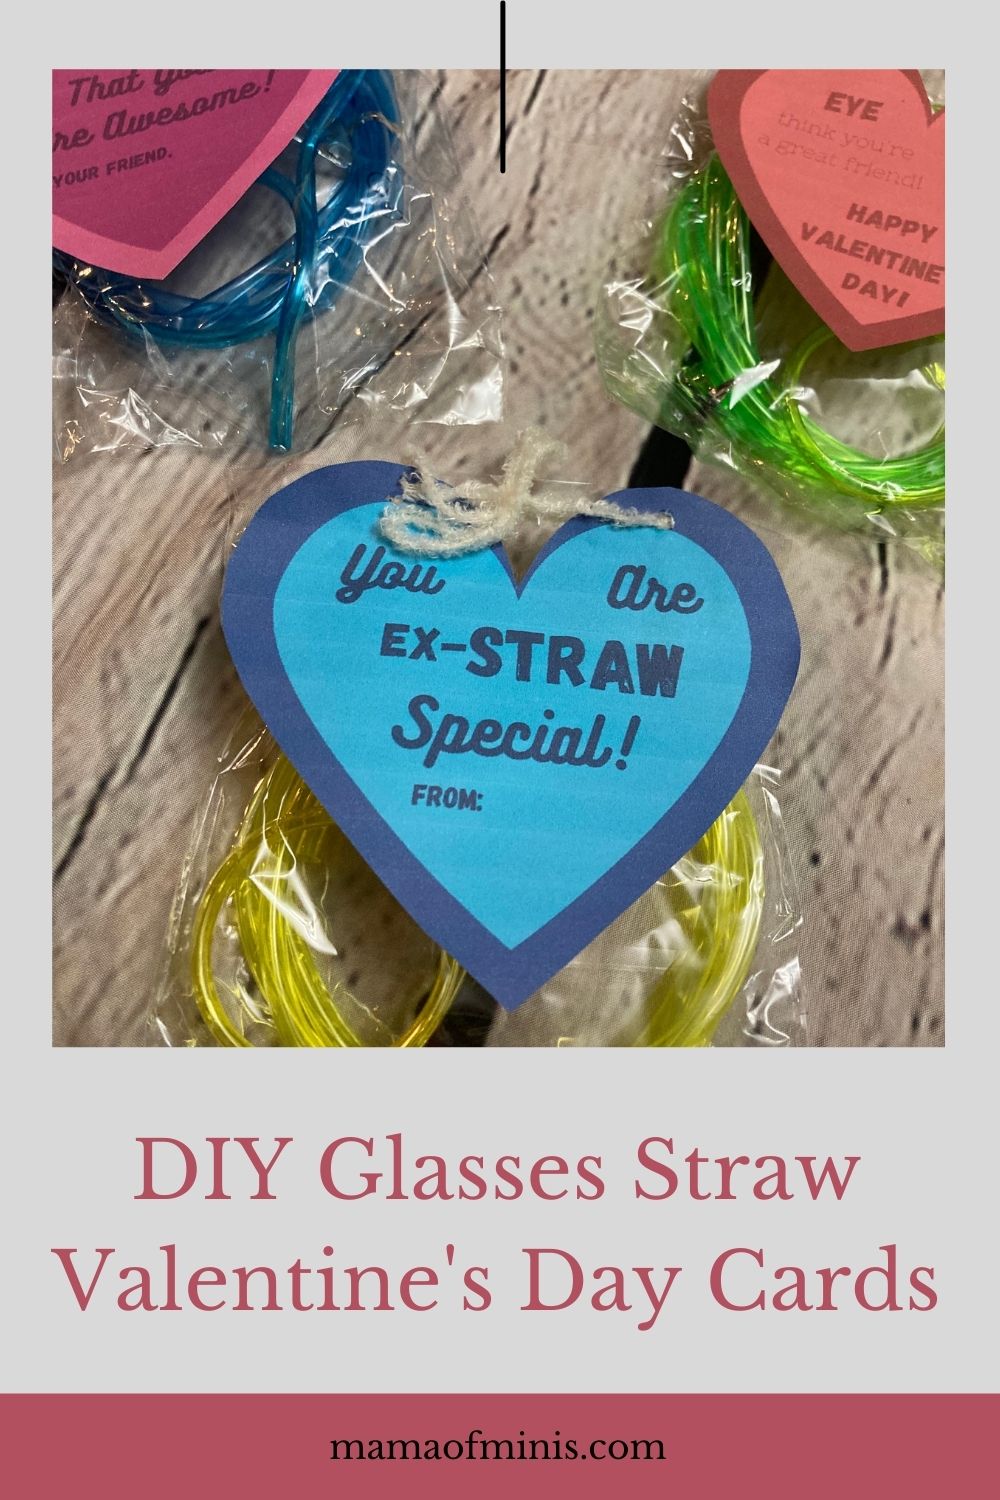 DIY Glasses Straw Valentine's Day Cards